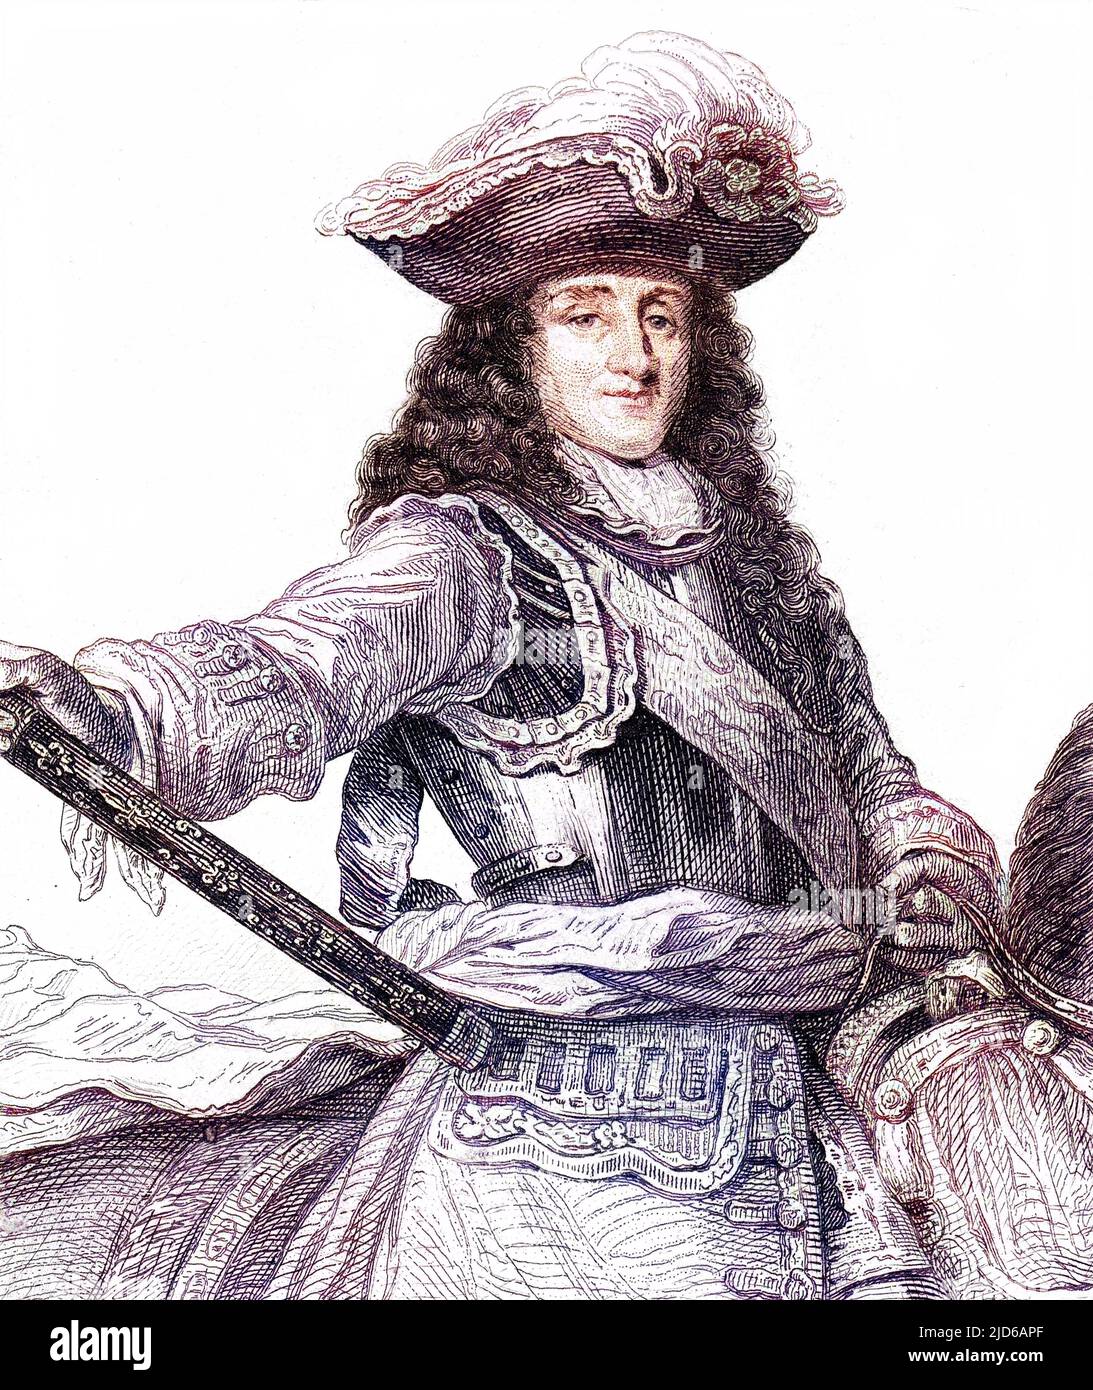 FRANCOIS HENRI MONTMORENCY- BOUTEVILLE, duc de LUXEMBOURG französischer Militärkommandant, marechal de France. Auf dem Pferd dargestellt Colorized Version von : 10163896 Datum: 1628 - 1695 Stockfoto